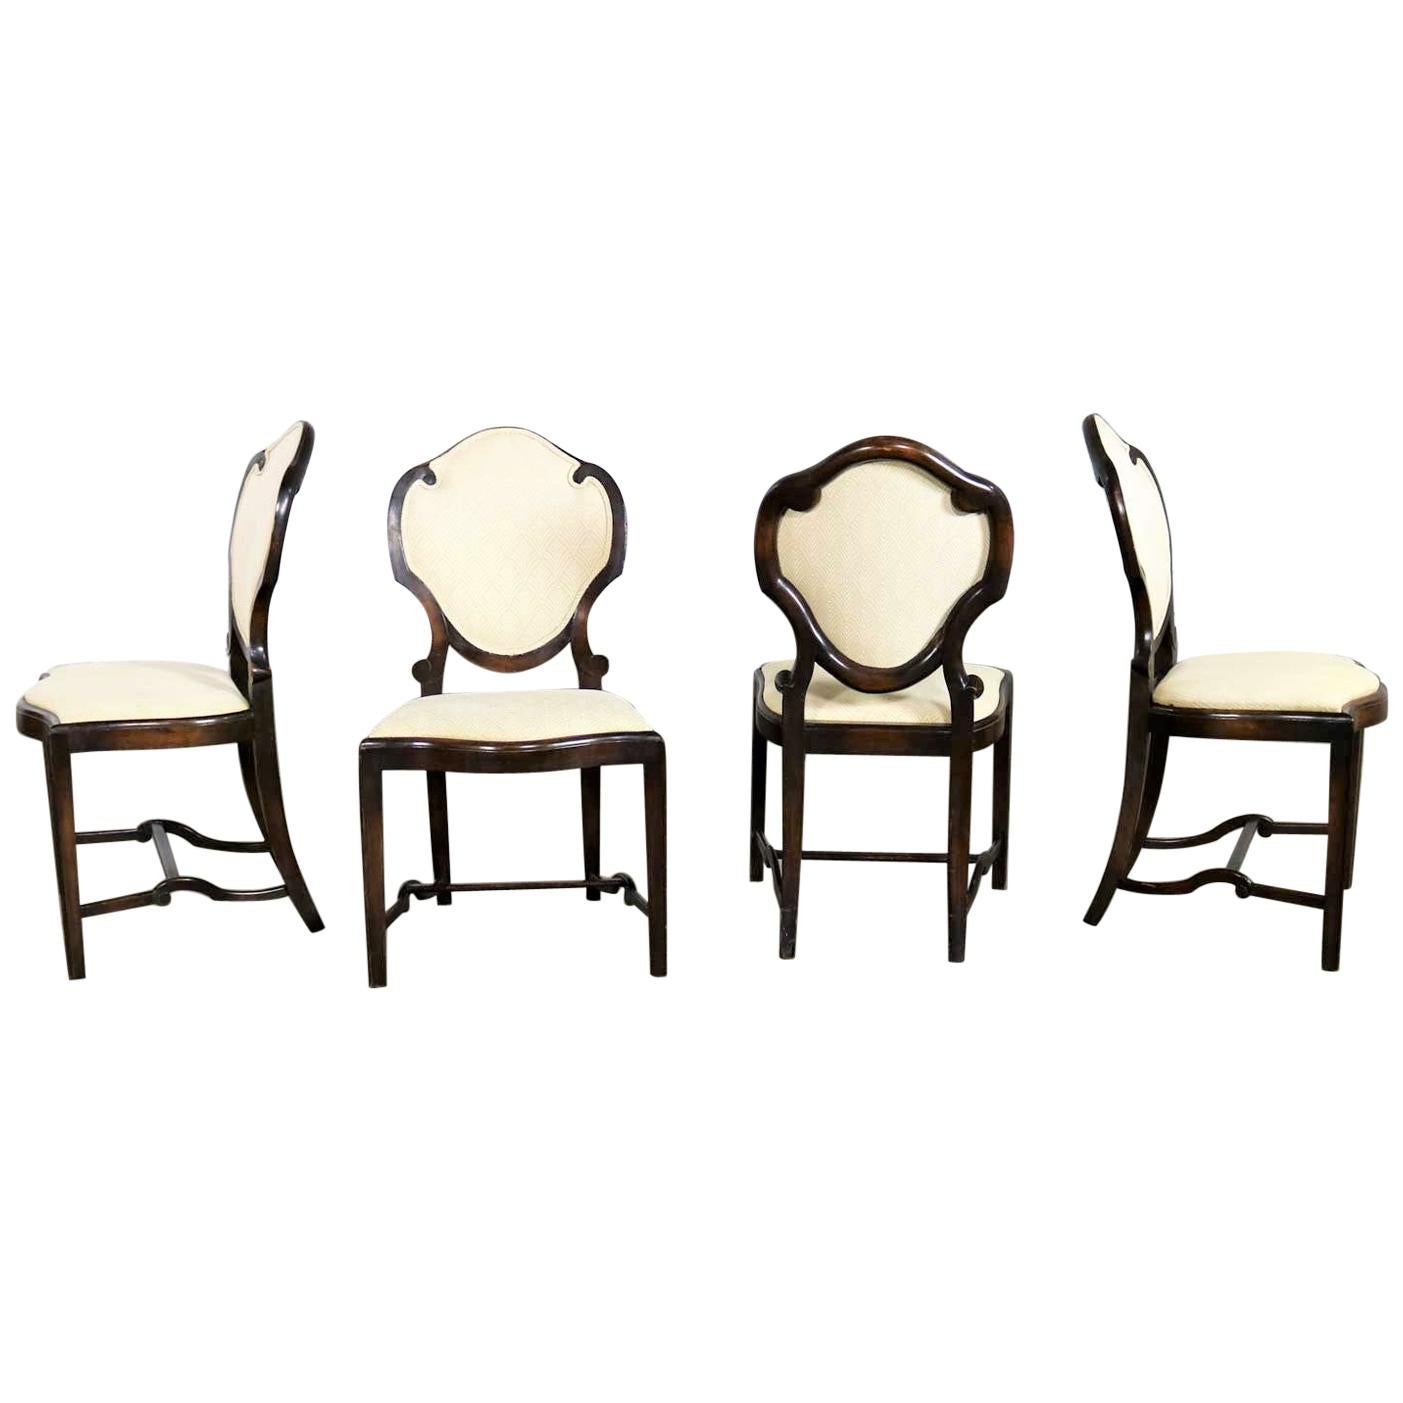 Antique Art Nouveau or Art Deco Shield Back Dining Chairs Set of Four